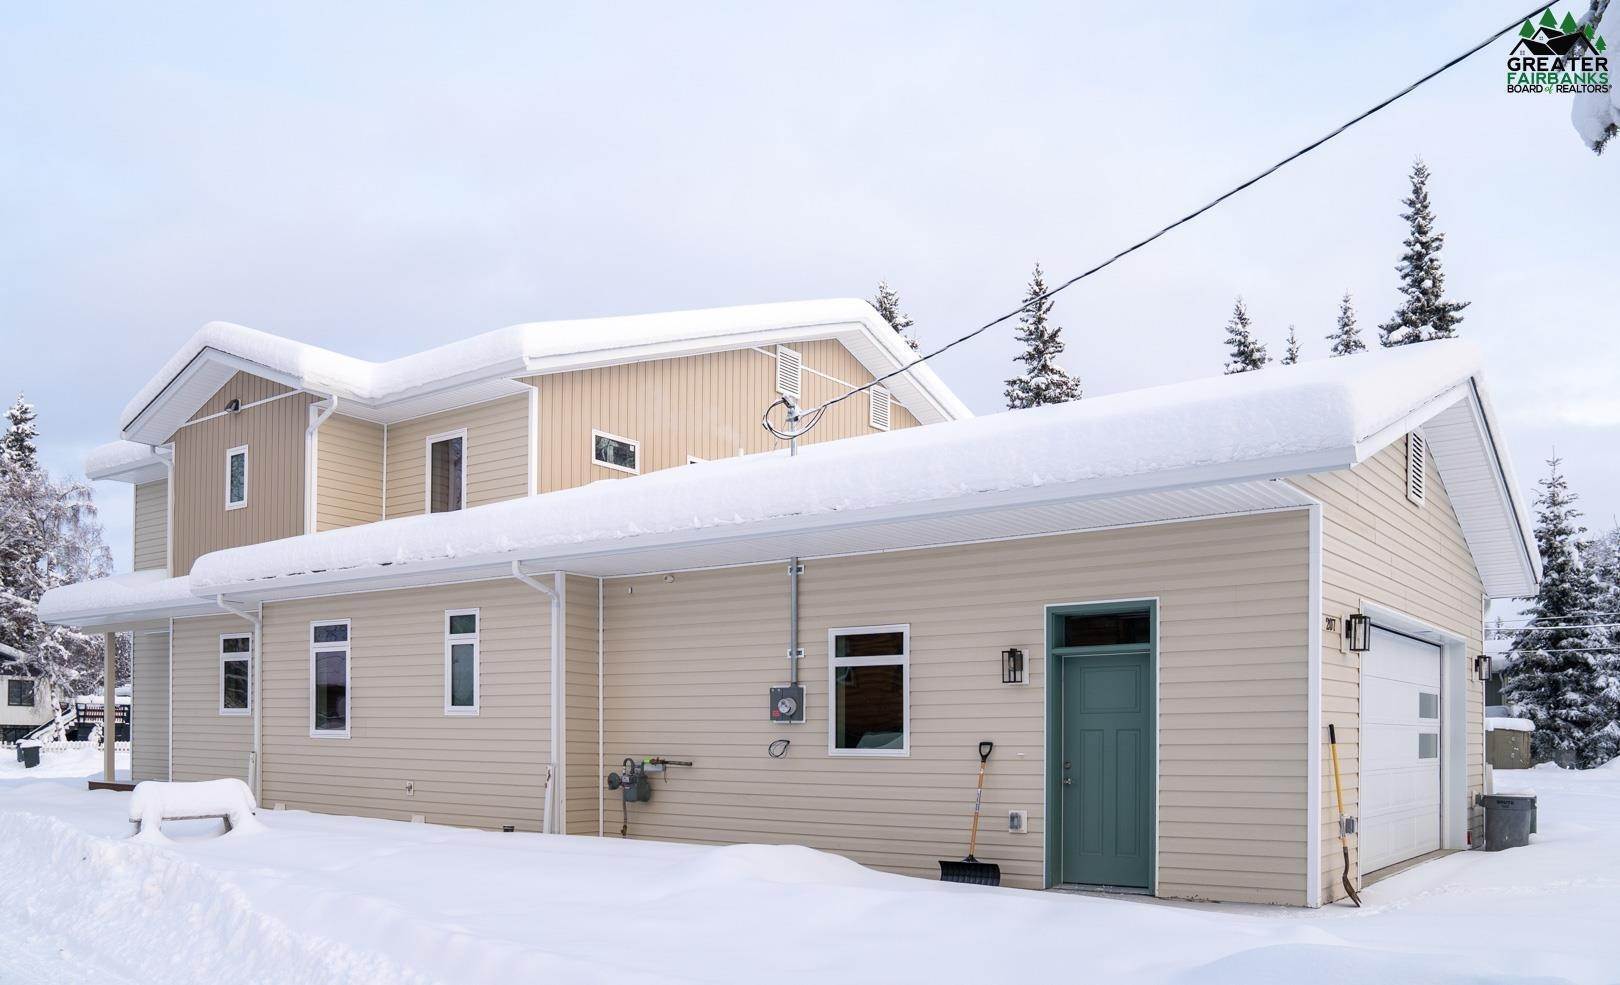 2. Single Family Homes for Sale at 207 FAREWELL AVENUE Fairbanks, Alaska 99701 United States